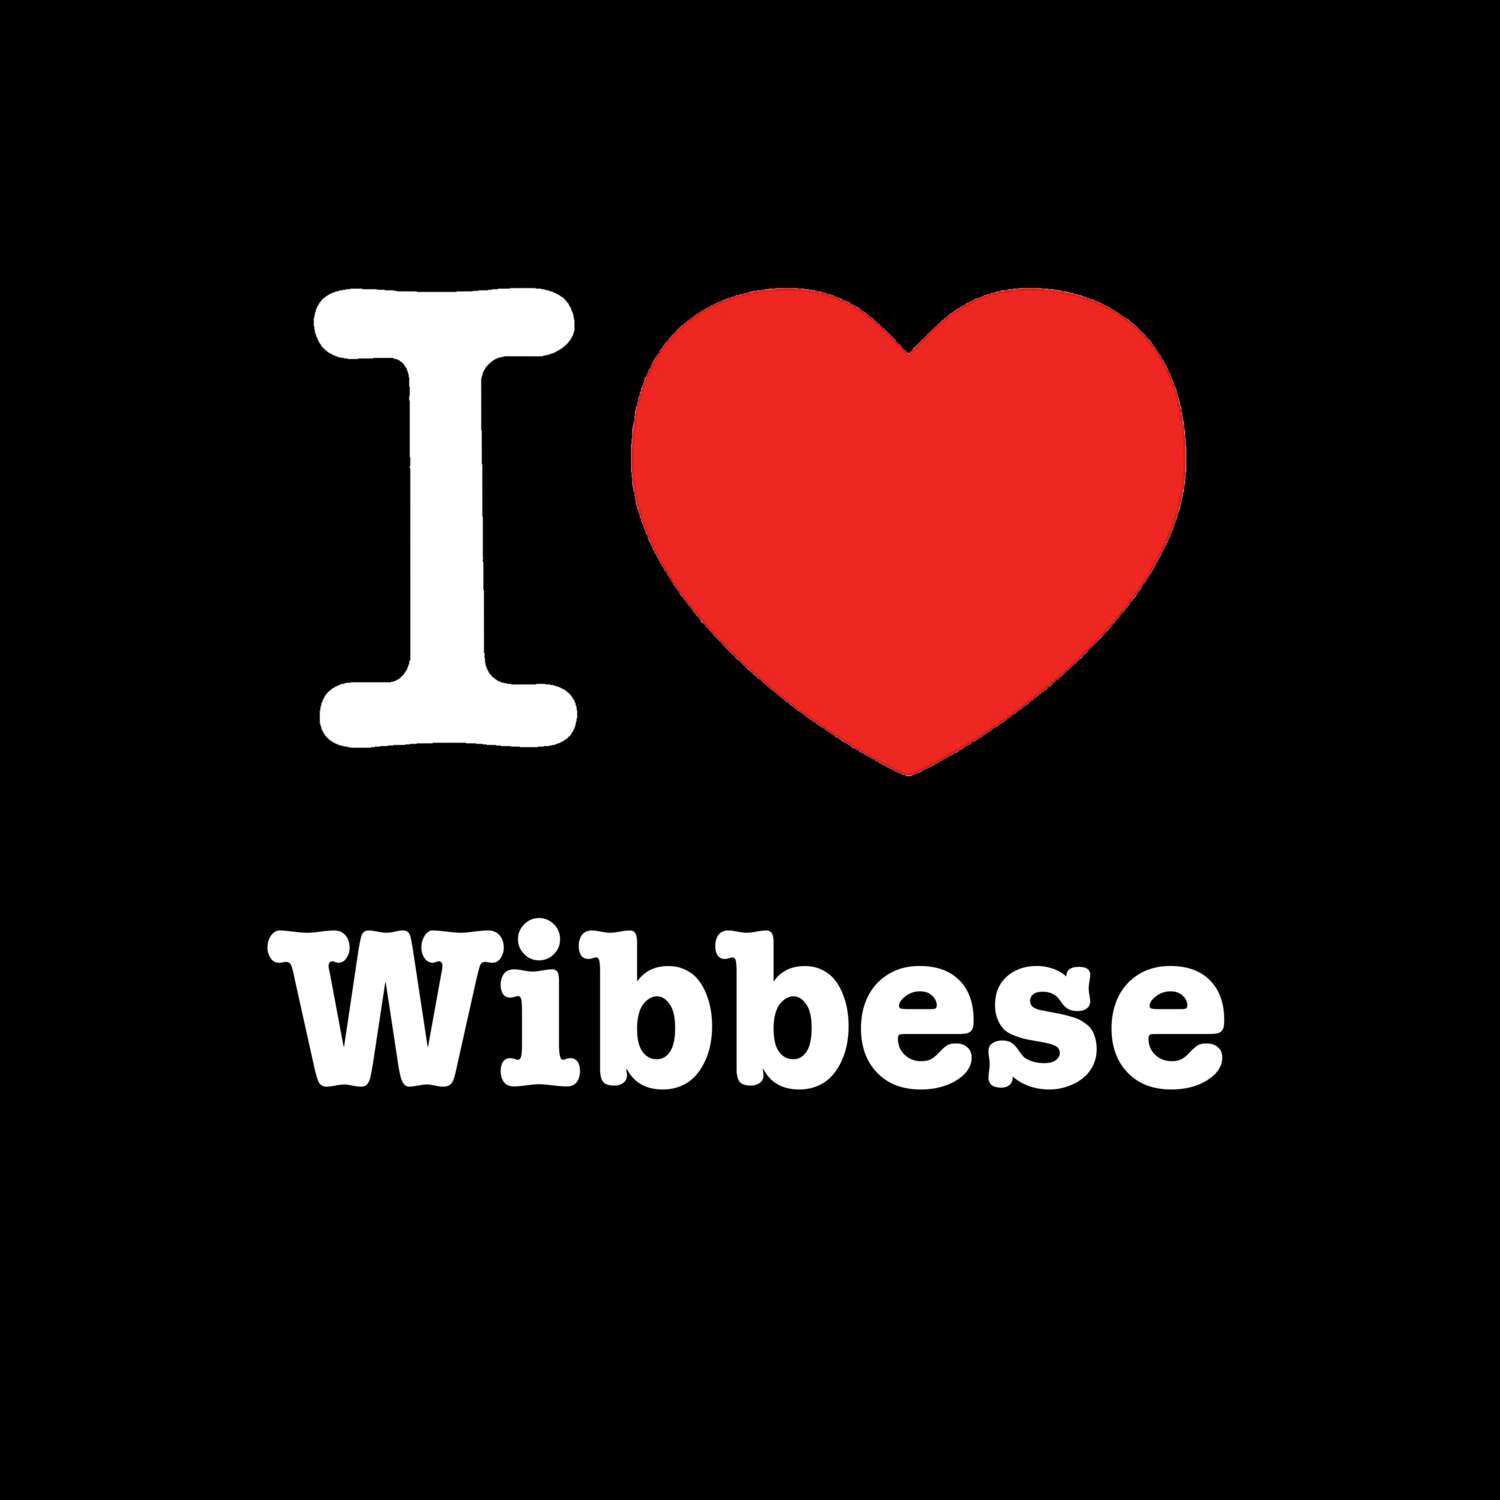 Wibbese T-Shirt »I love«